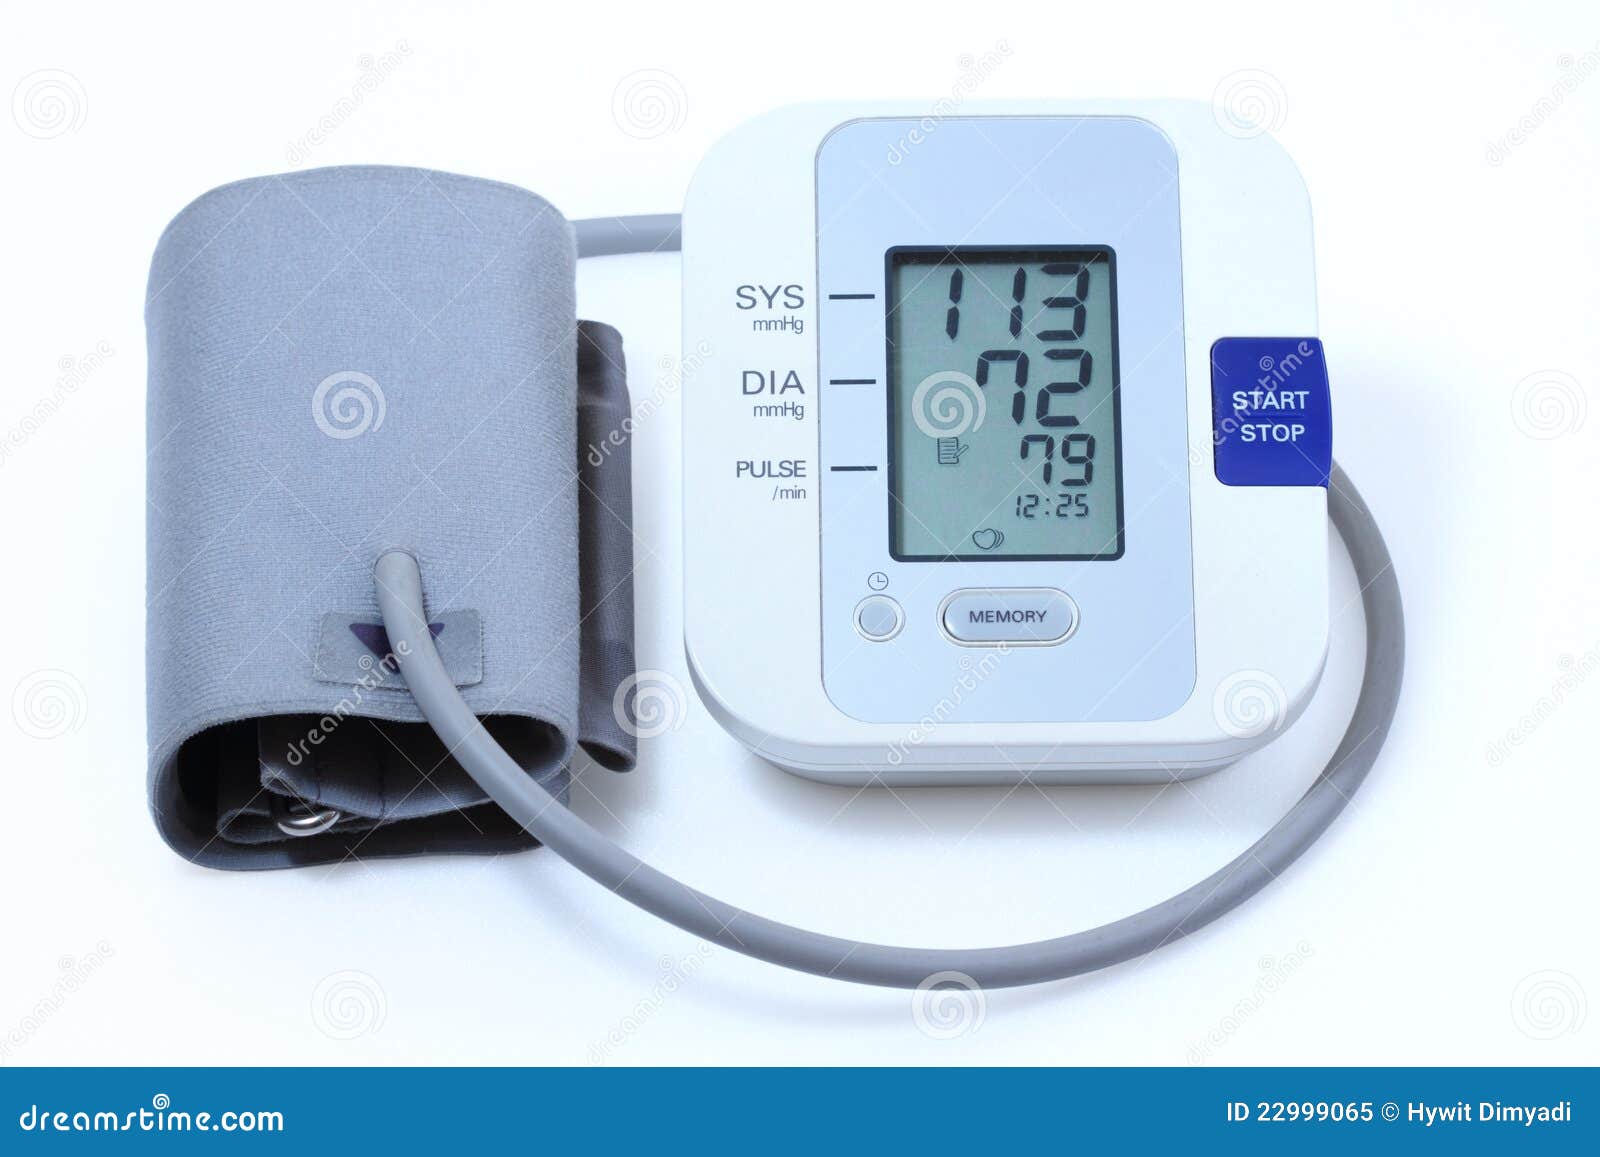 free clipart of blood pressure cuff - photo #44